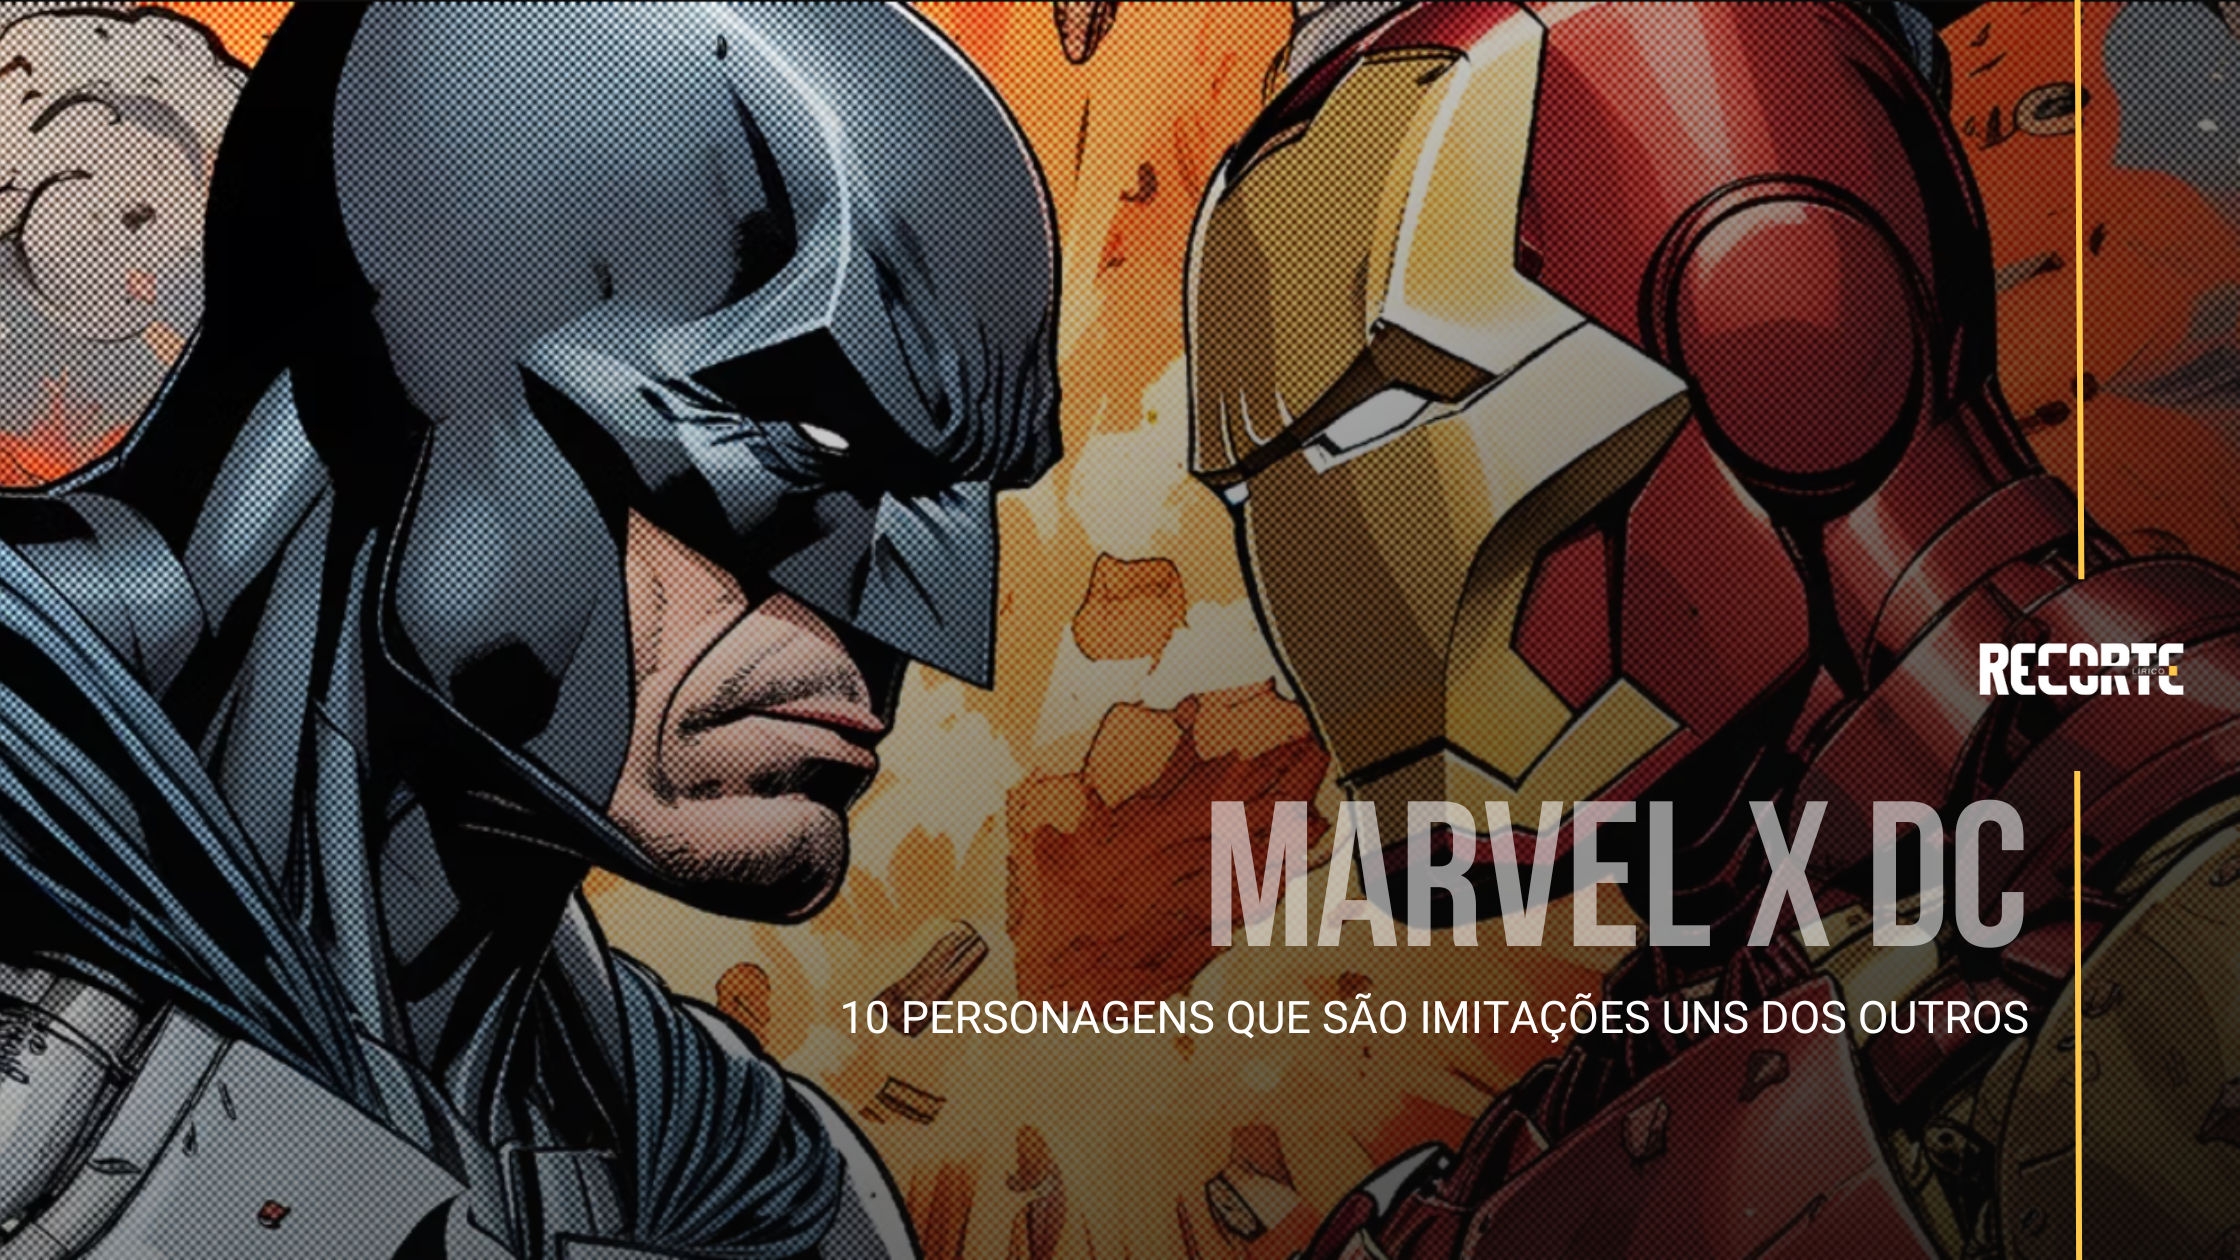 Marvel x DC